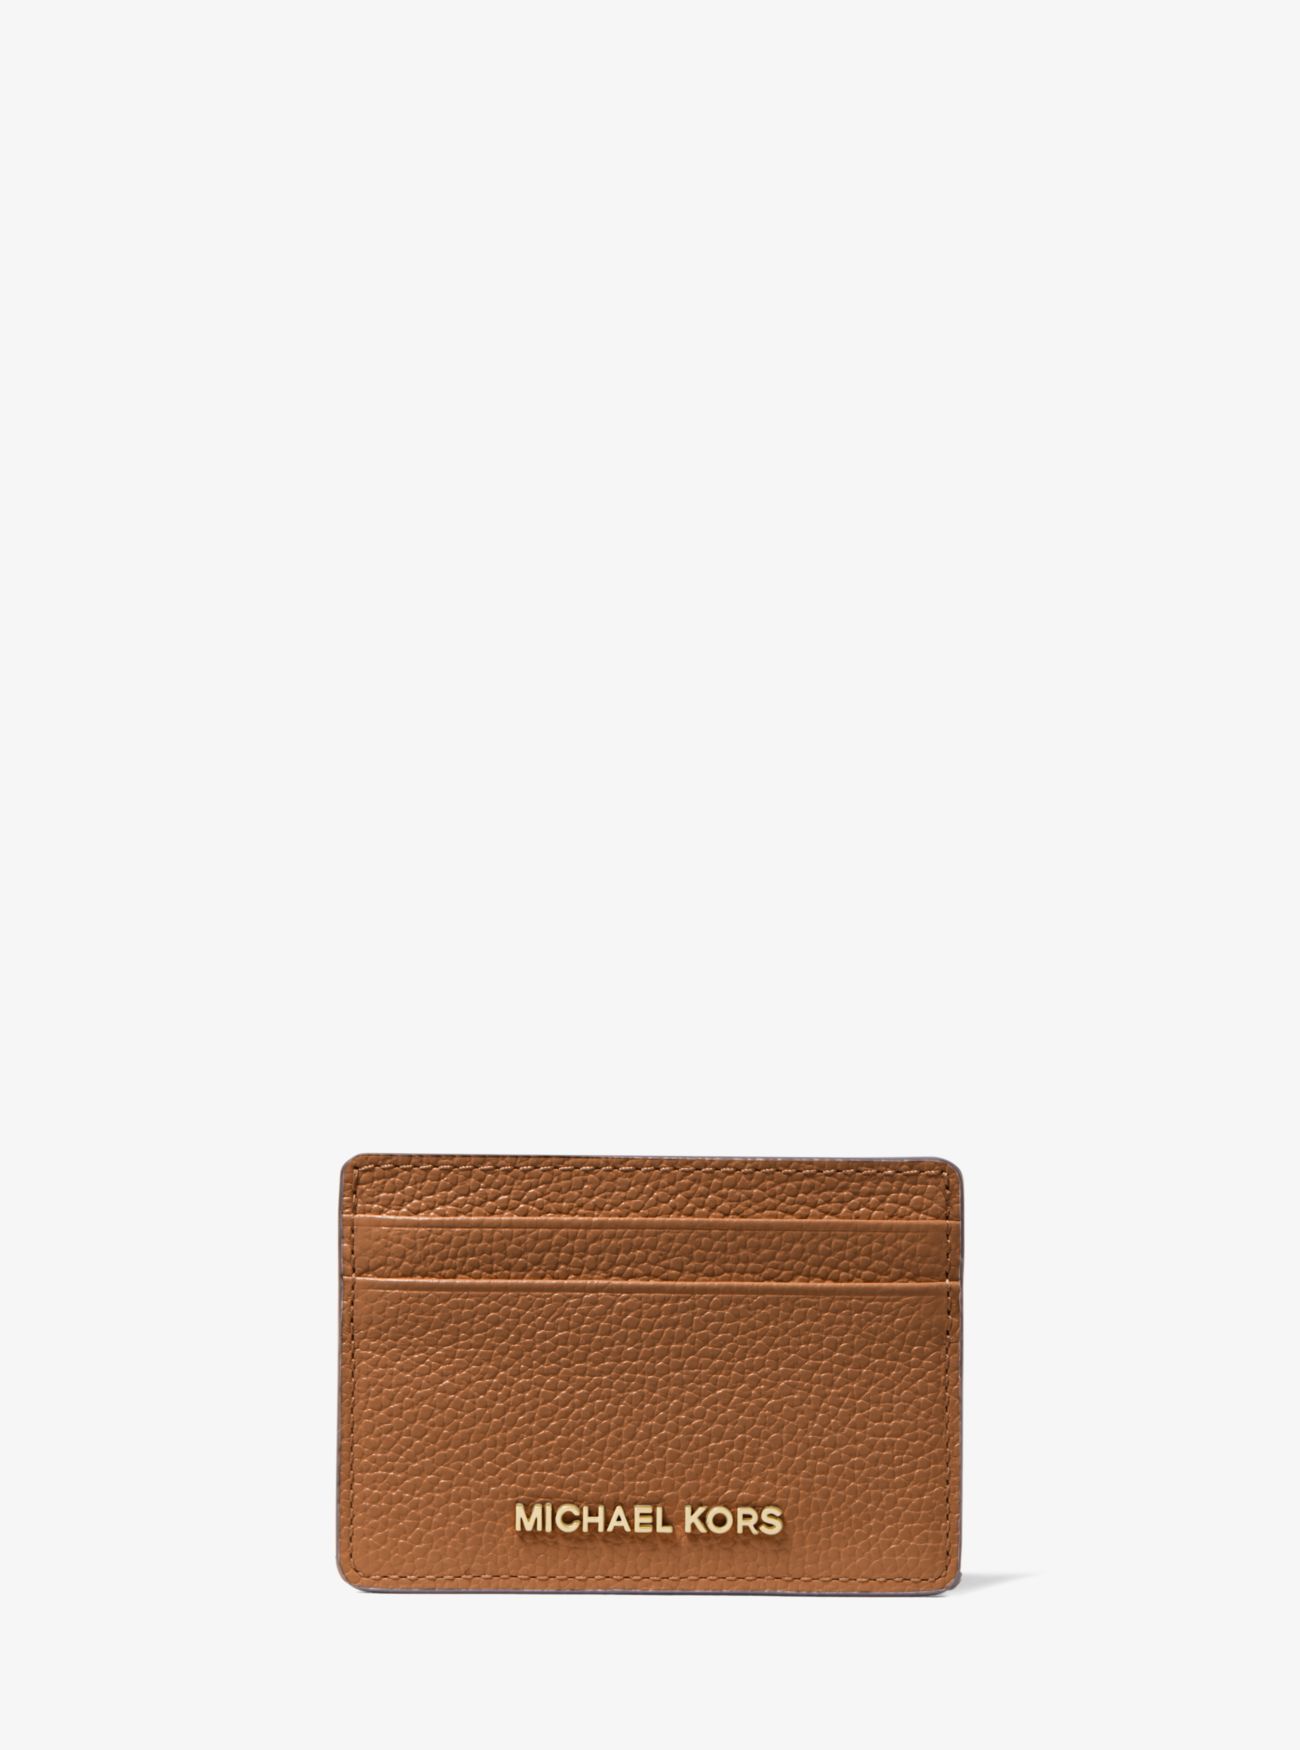 MK Pebbled Leather Card Case - Brown - Michael Kors